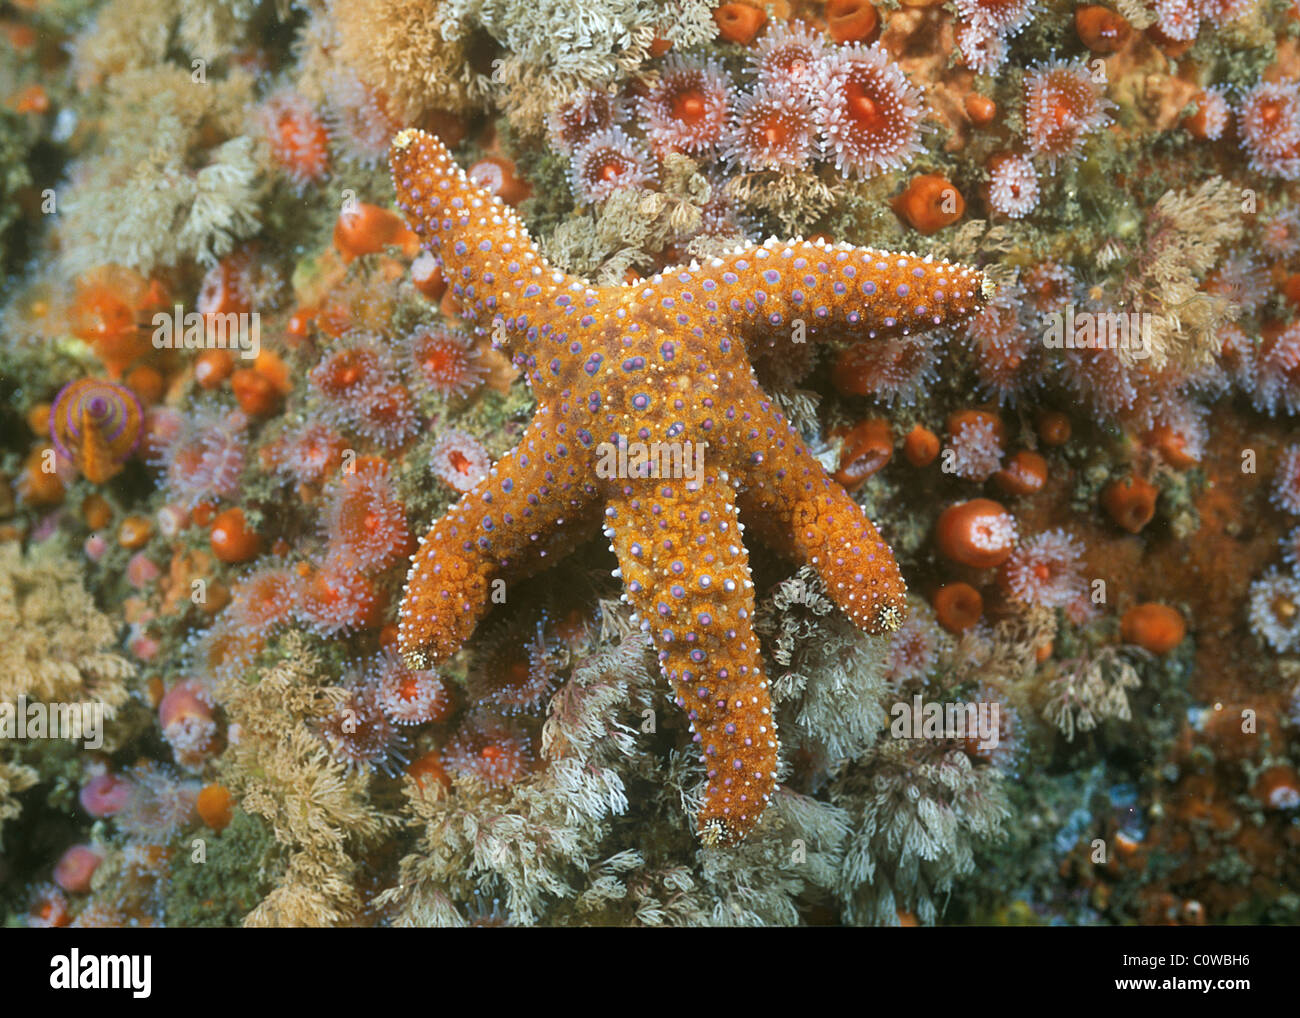 Ochre Sea Star (Pisaster ochraceus) among Strawberry Anemone (corynactis californica) Stock Photo